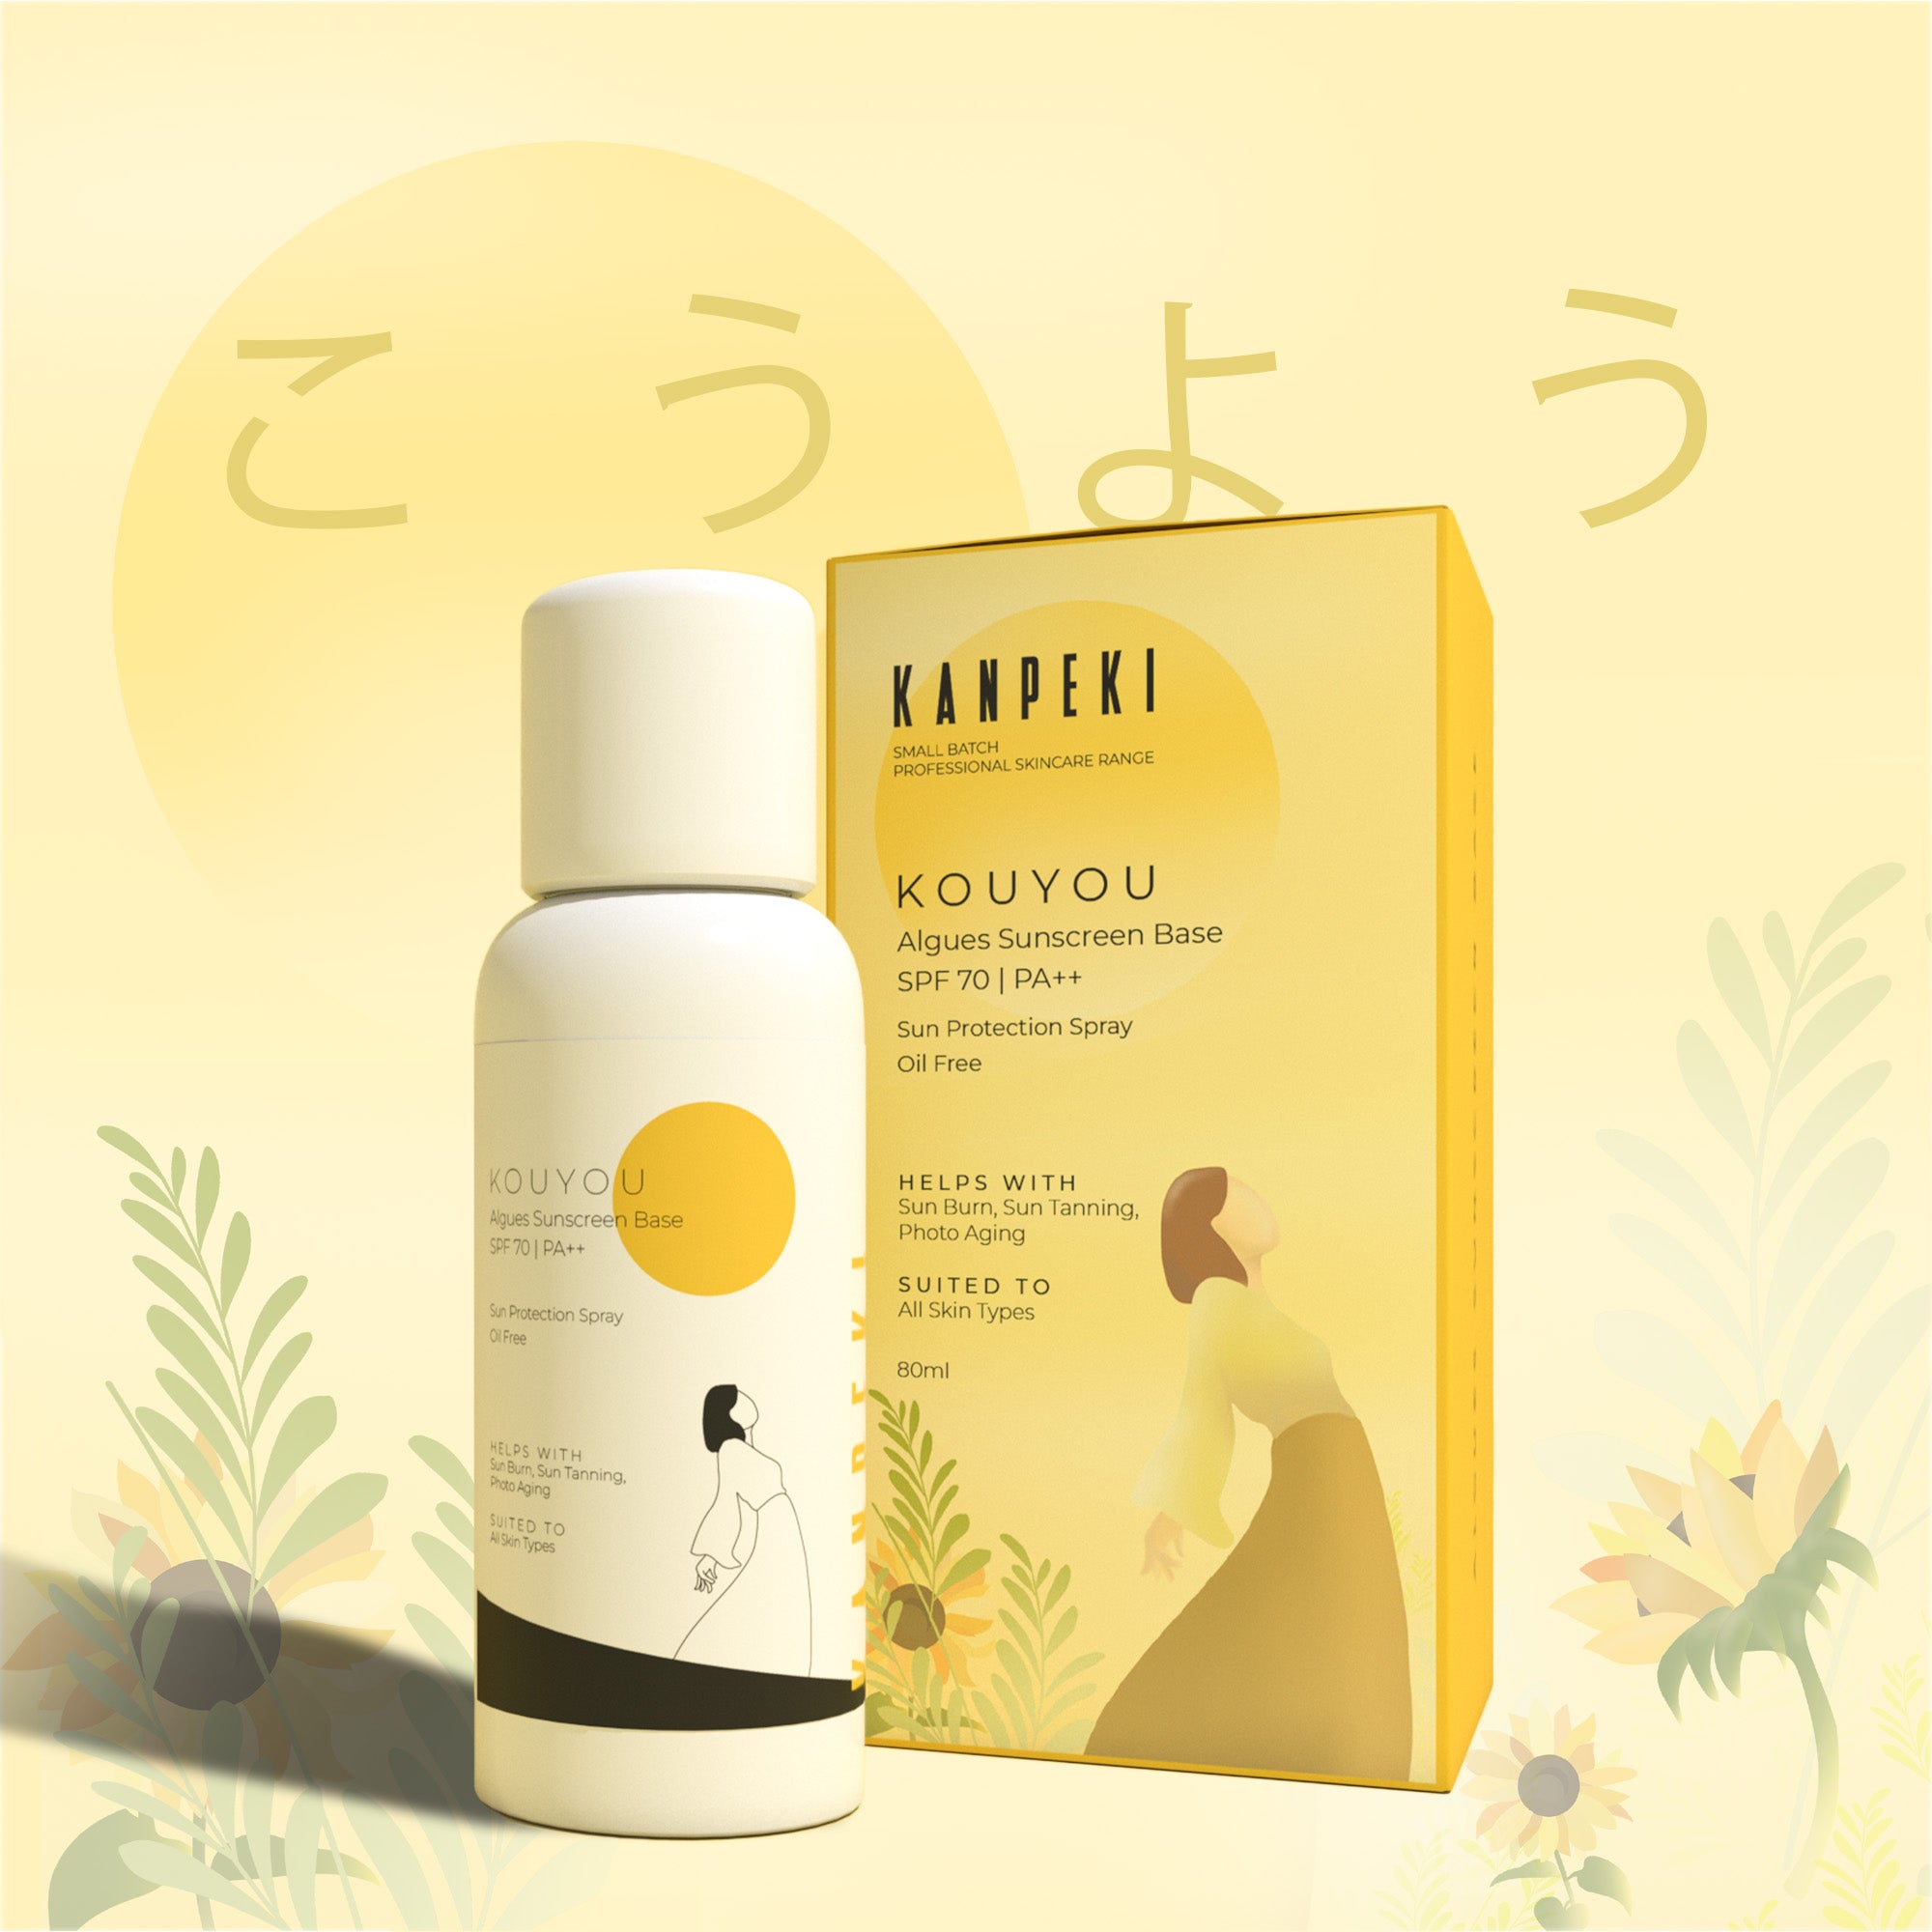 Kouyou - Algues Sunscreen Base